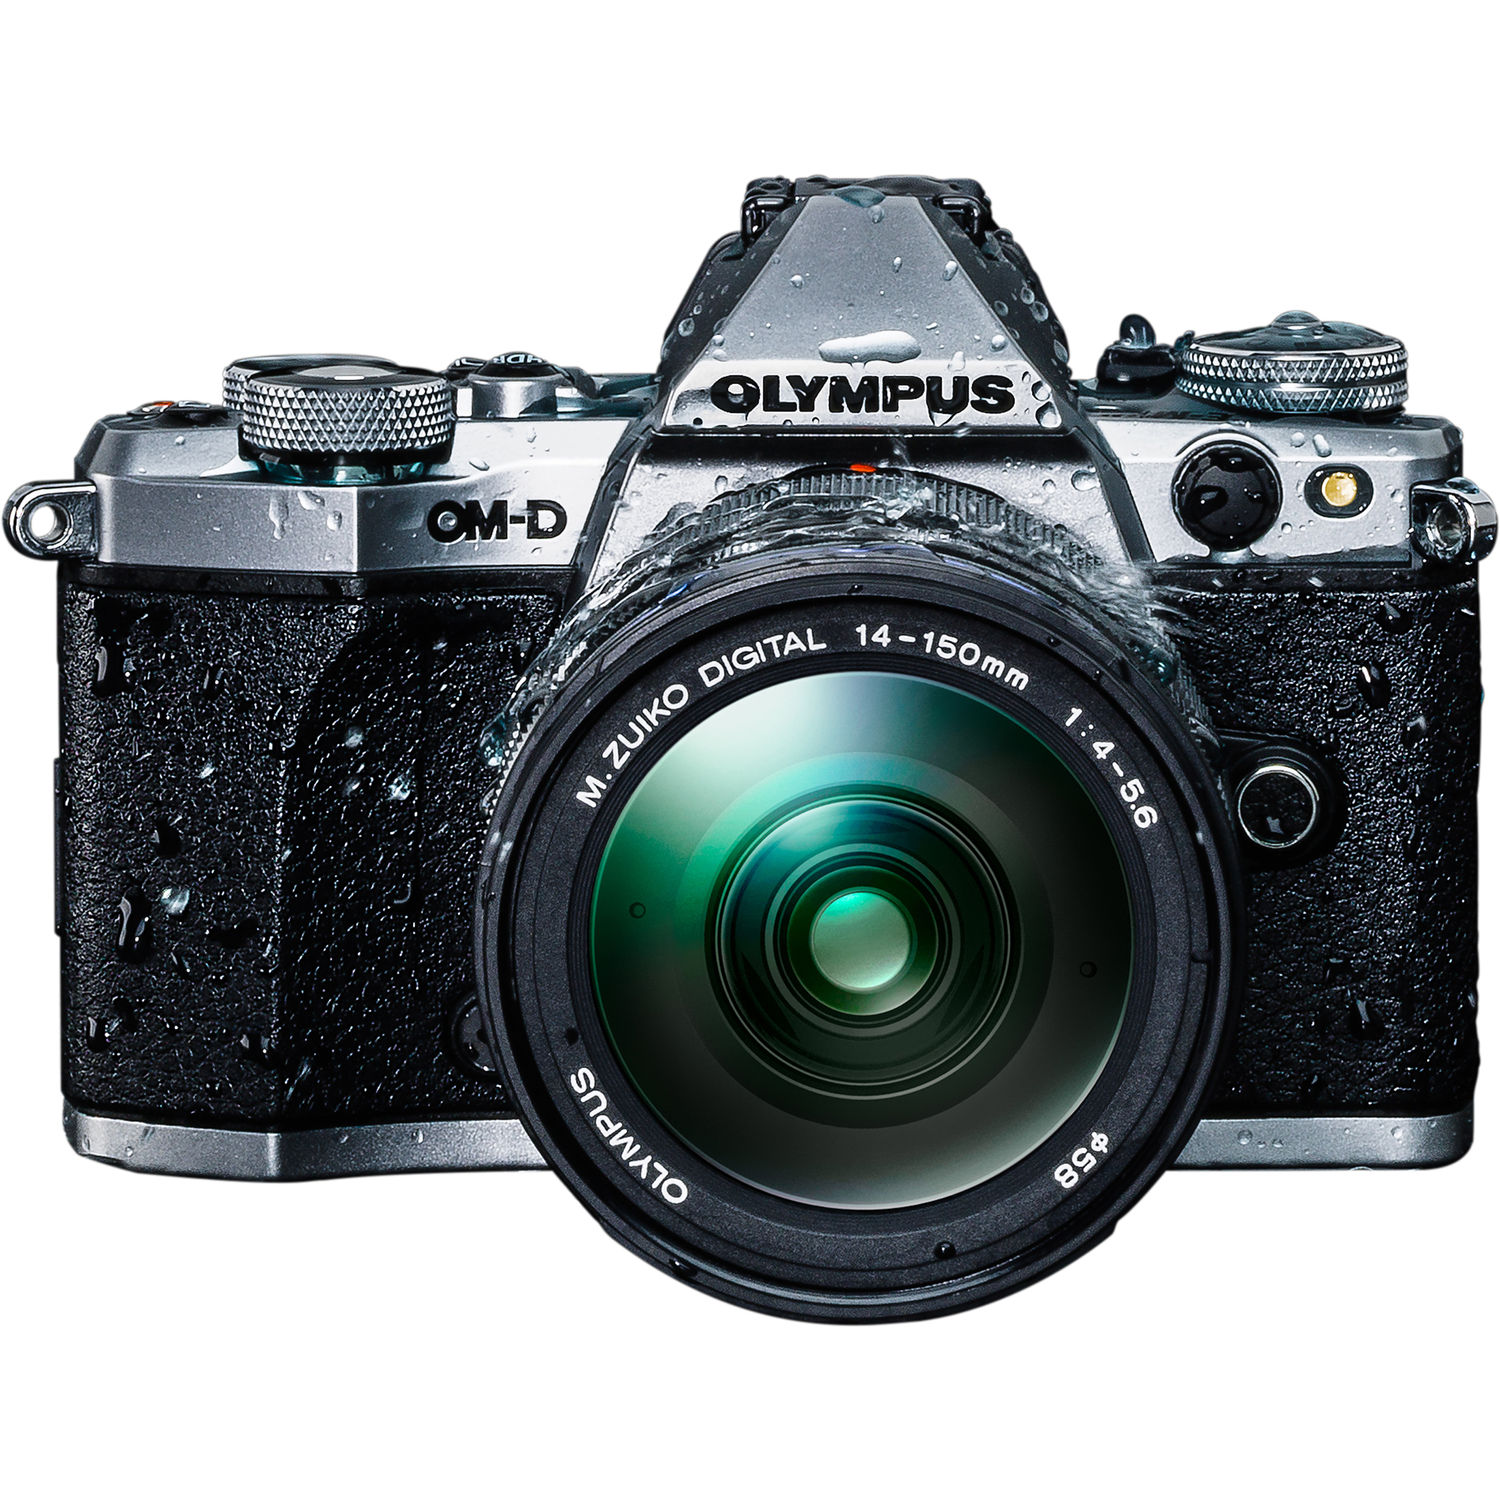 Olympus OM-D E-M5 II Micro Four Thirds  Digital Camera - Body Only (Silver)